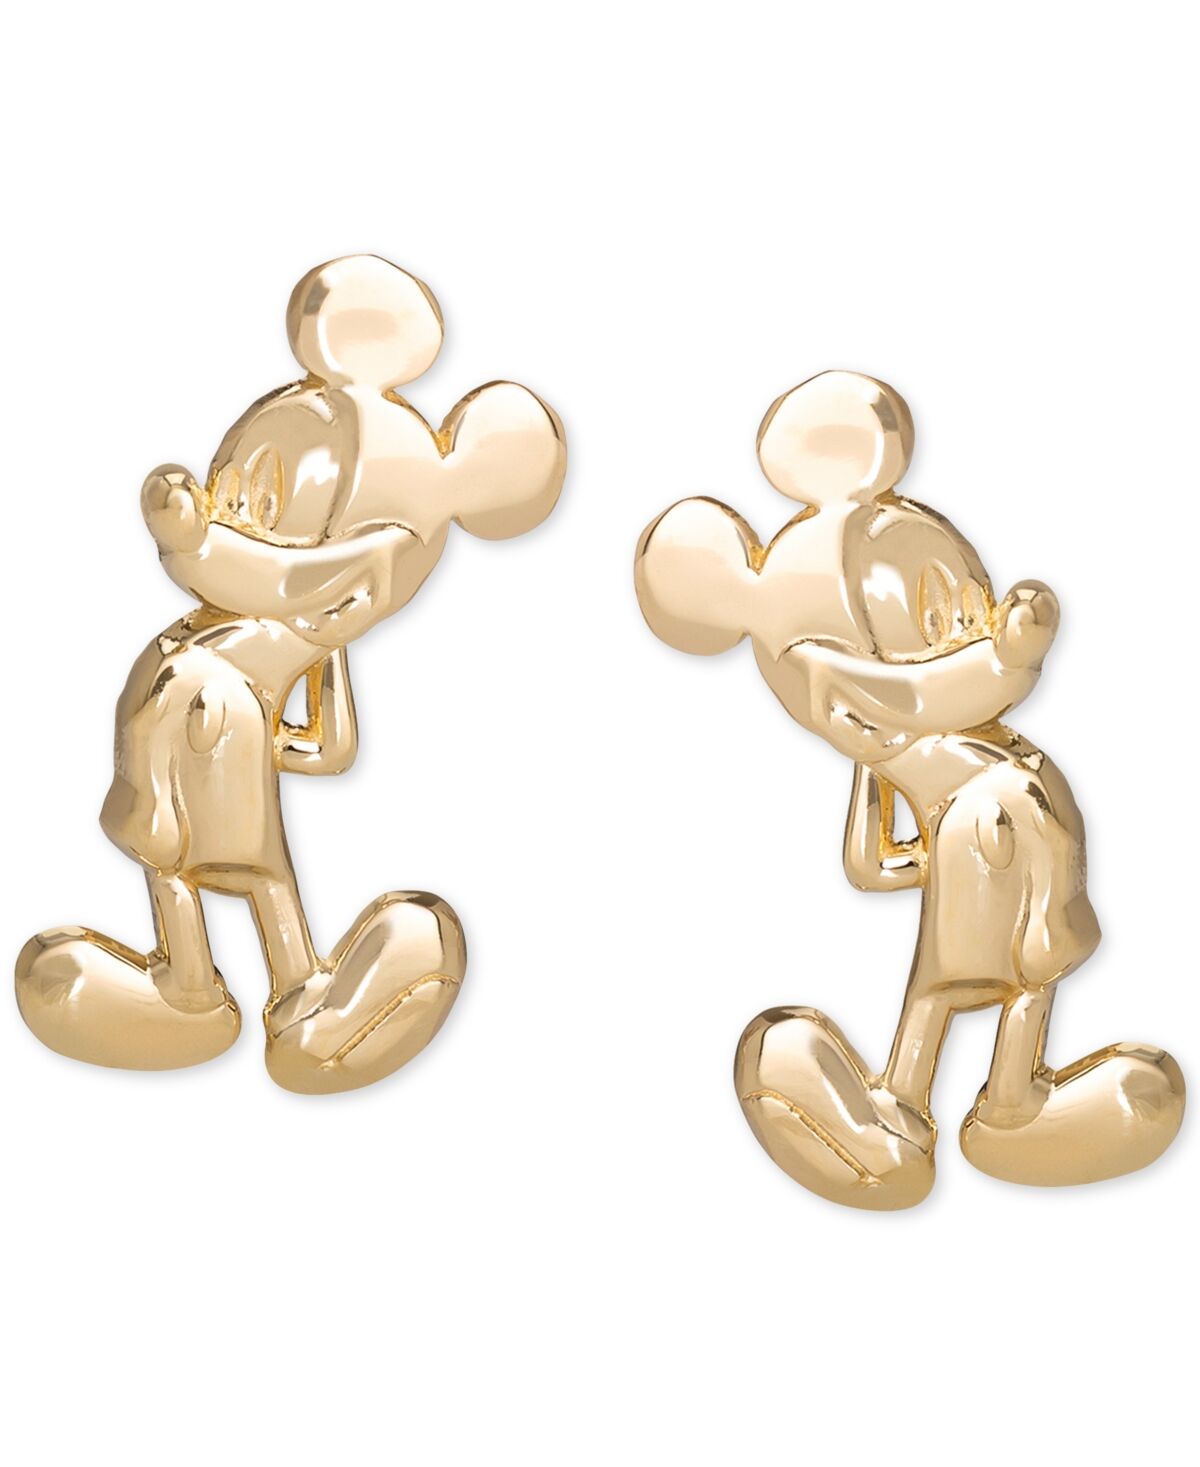 Disney Children's Mickey Mouse Stud Earrings in 14k Gold - Gold